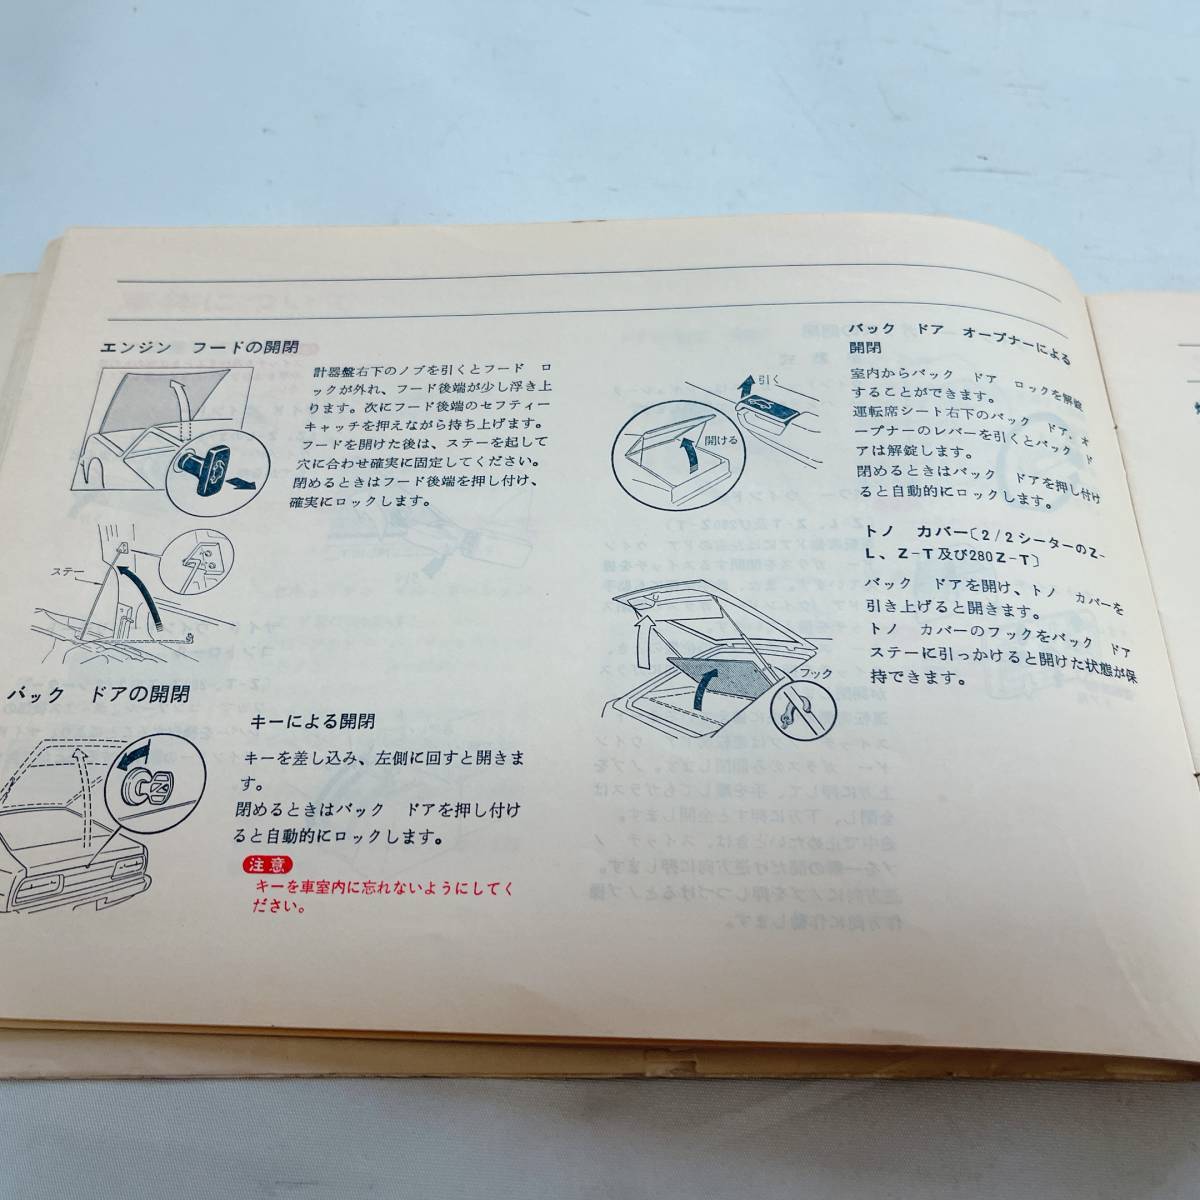  Nissan Fairlady Z 130 type инструкция по эксплуатации 57 год 11 месяц 80 страница 